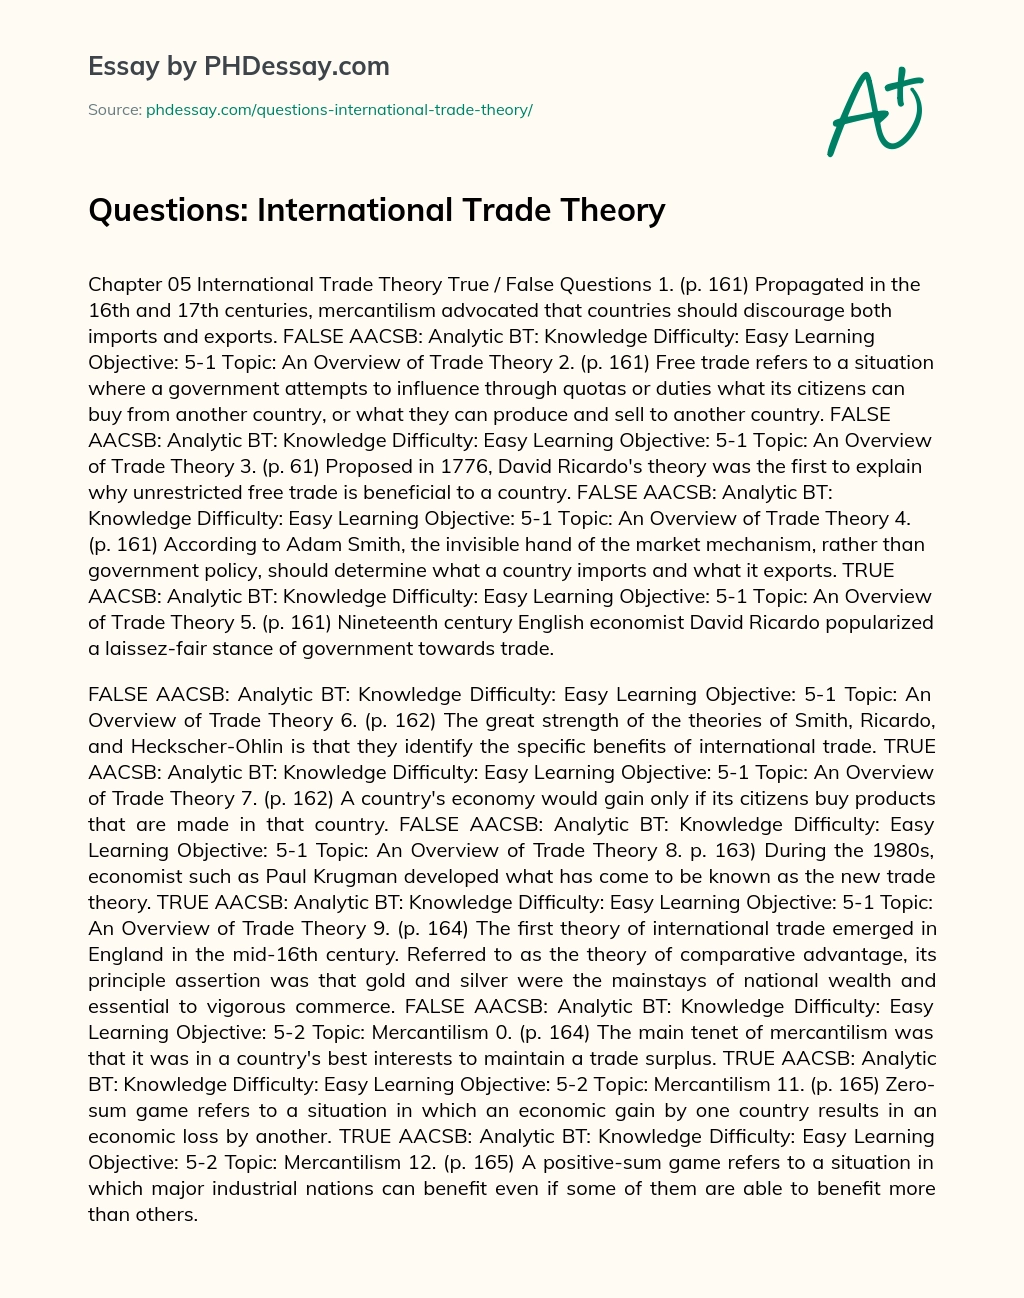 Questions: International Trade Theory essay